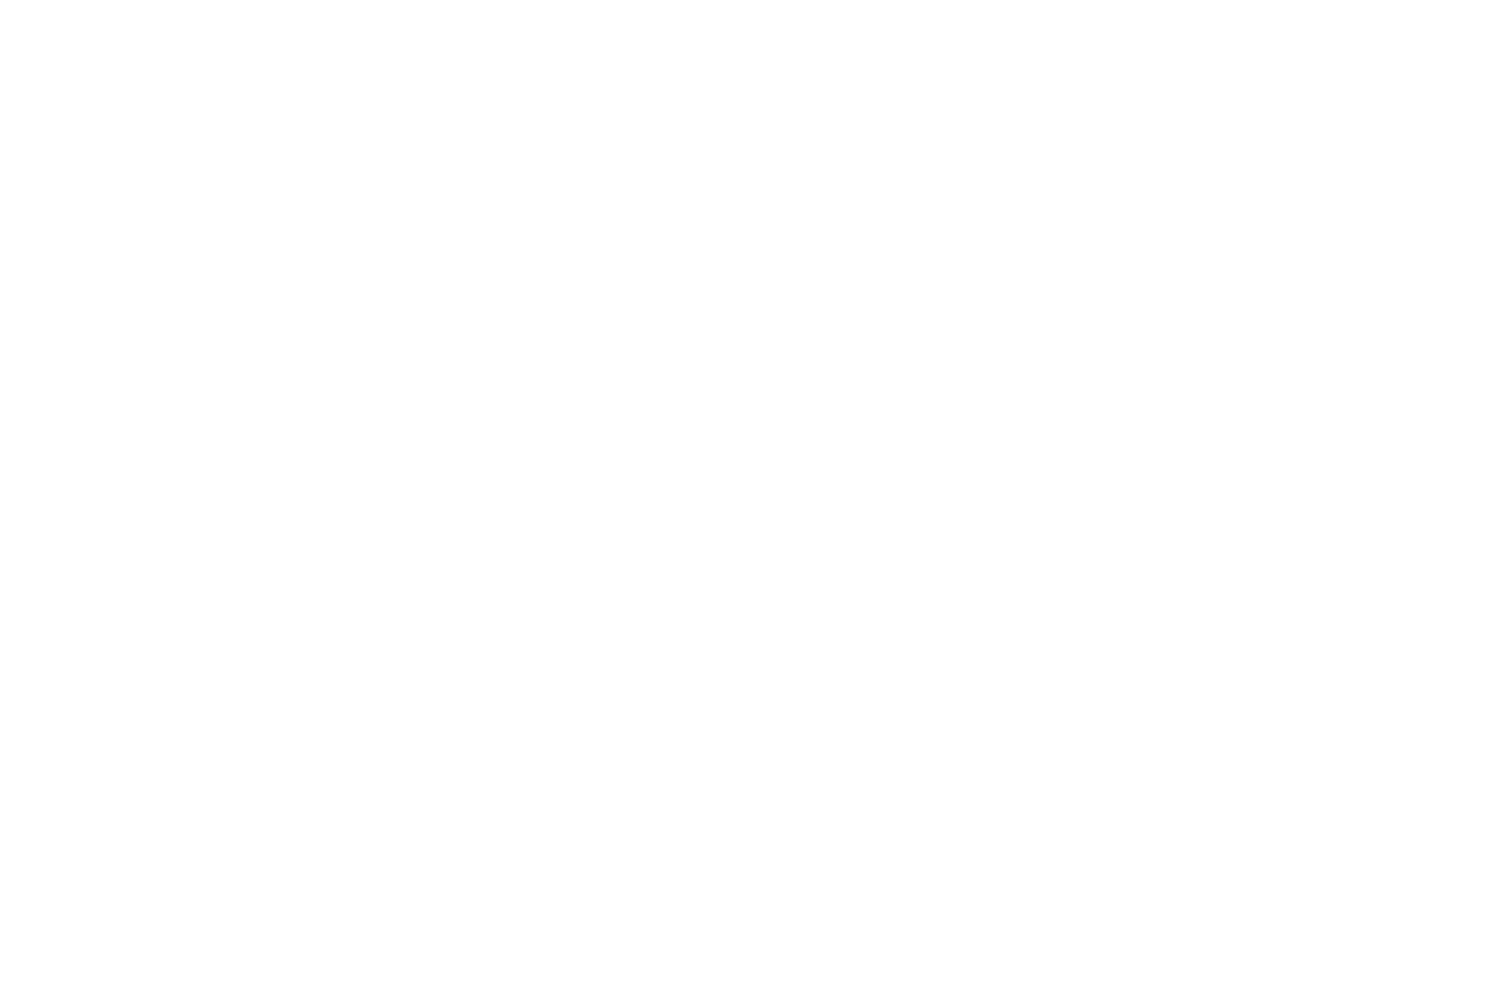 Cosma Photography